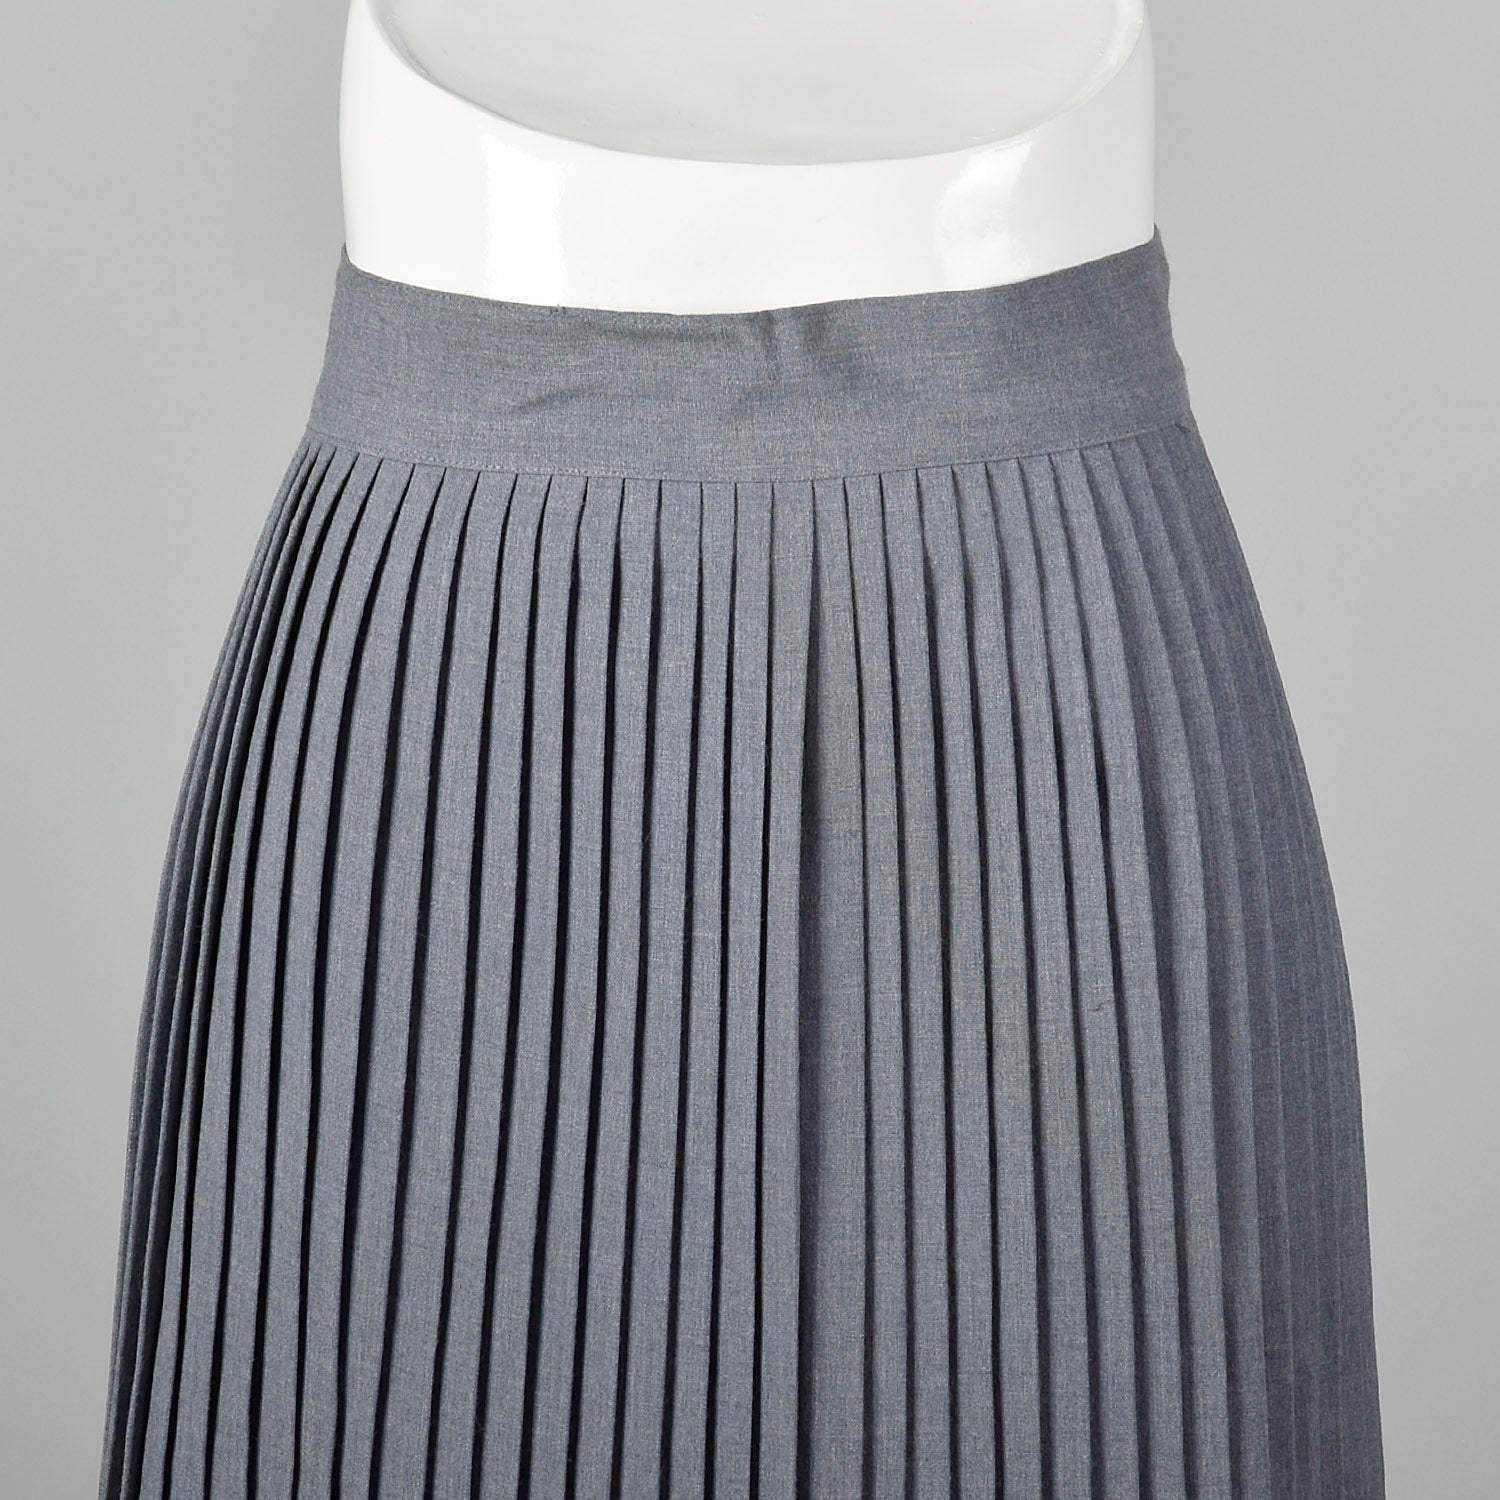 Small 1950s Gray Burlington Mills Pleated Skirt